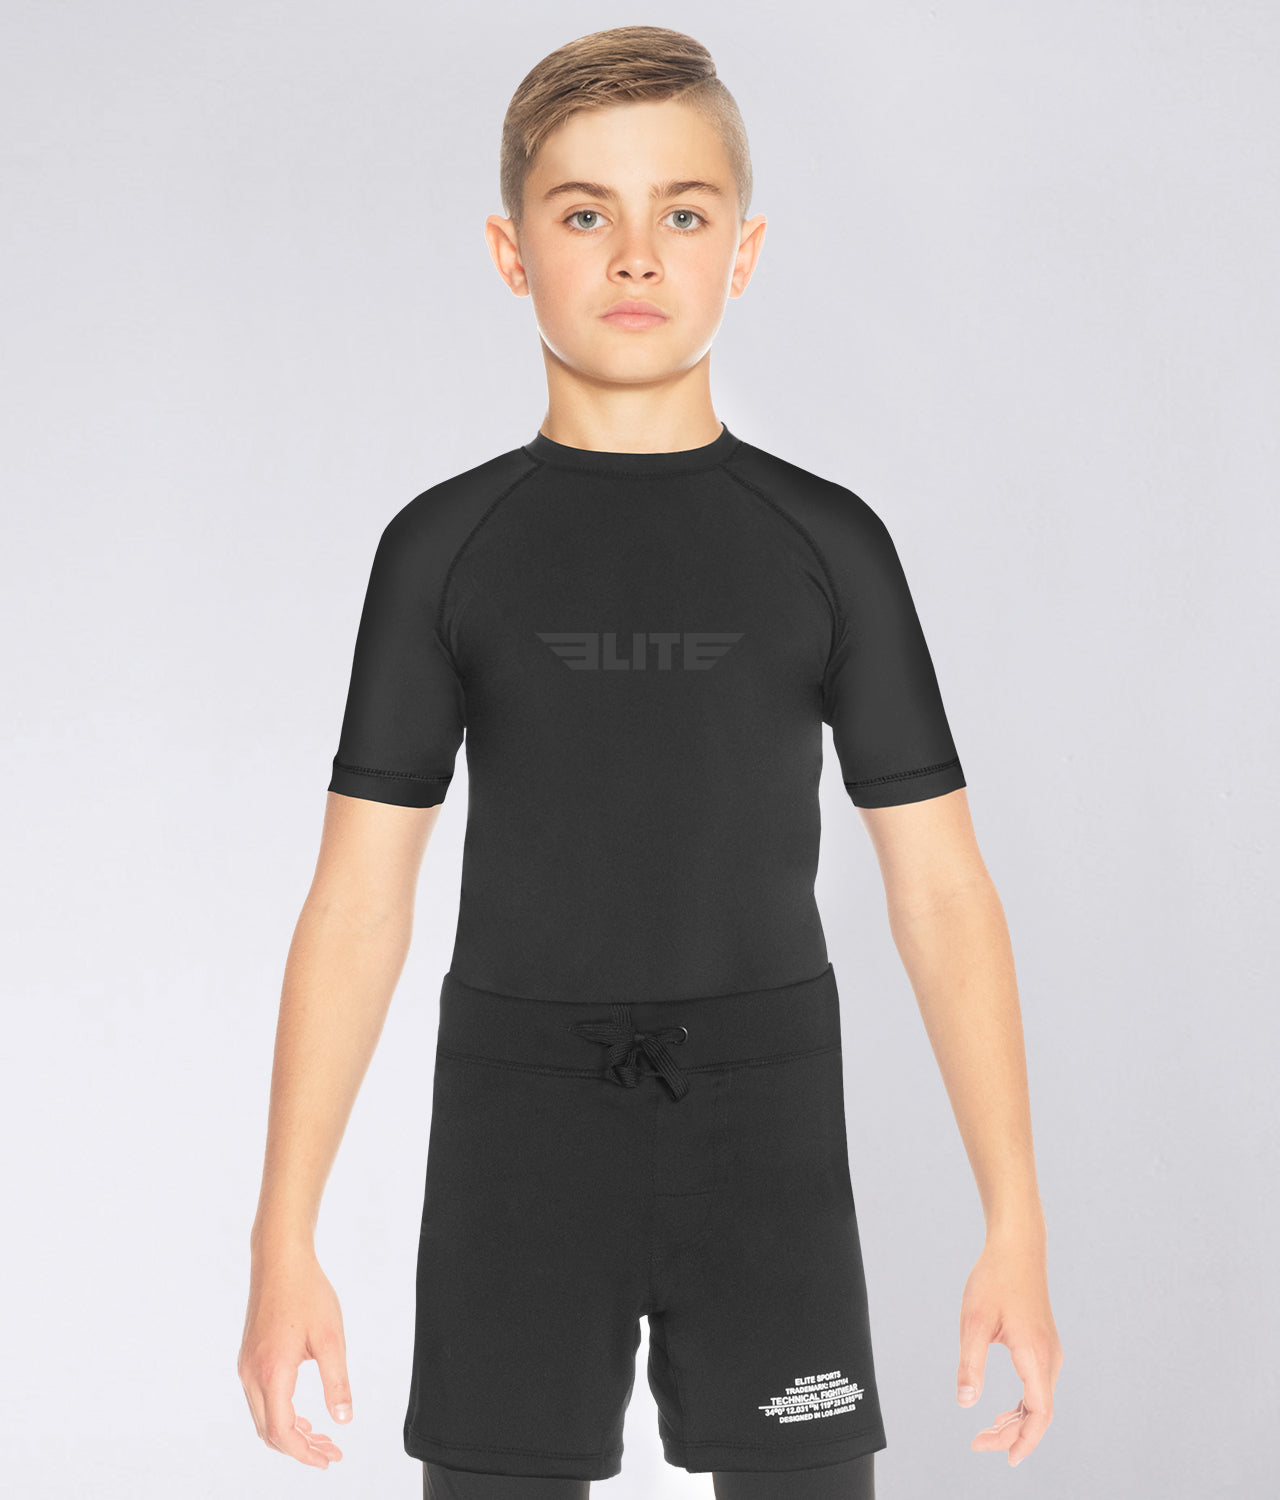 Elite Sports Kids' Standard Black Short Sleeve Training Rash Guard